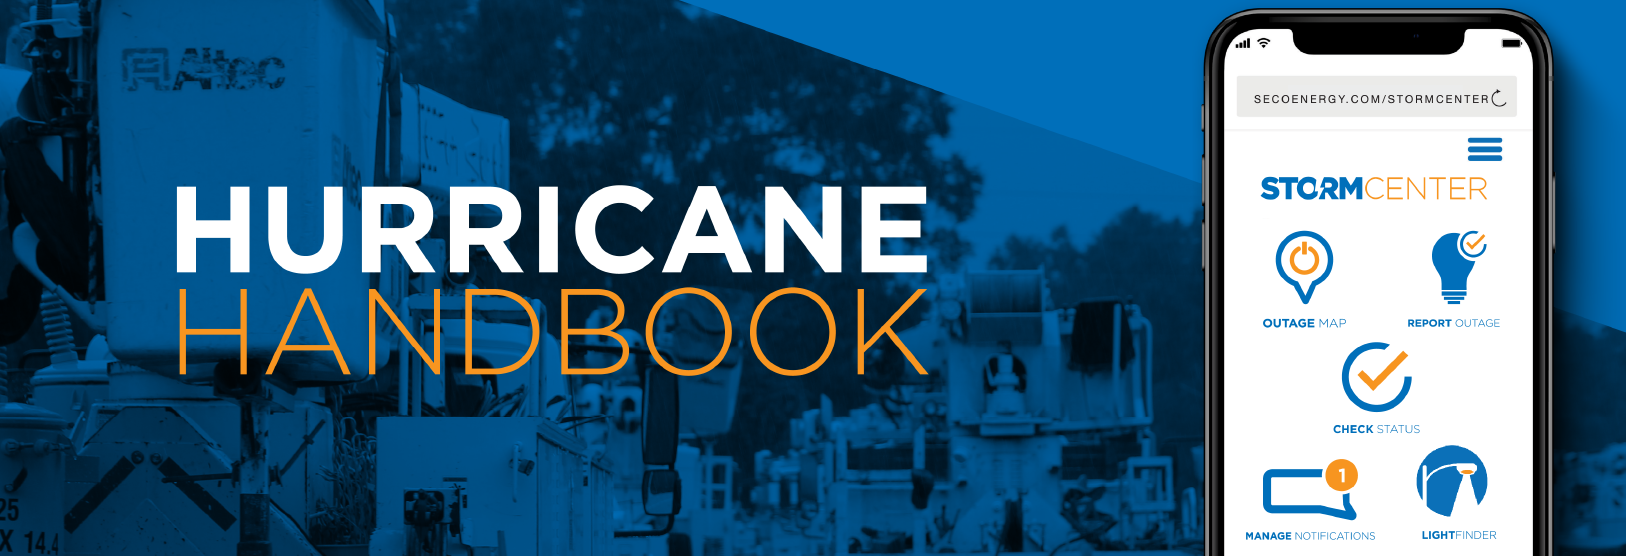 SECO News June 2020 Hurricane Handbook